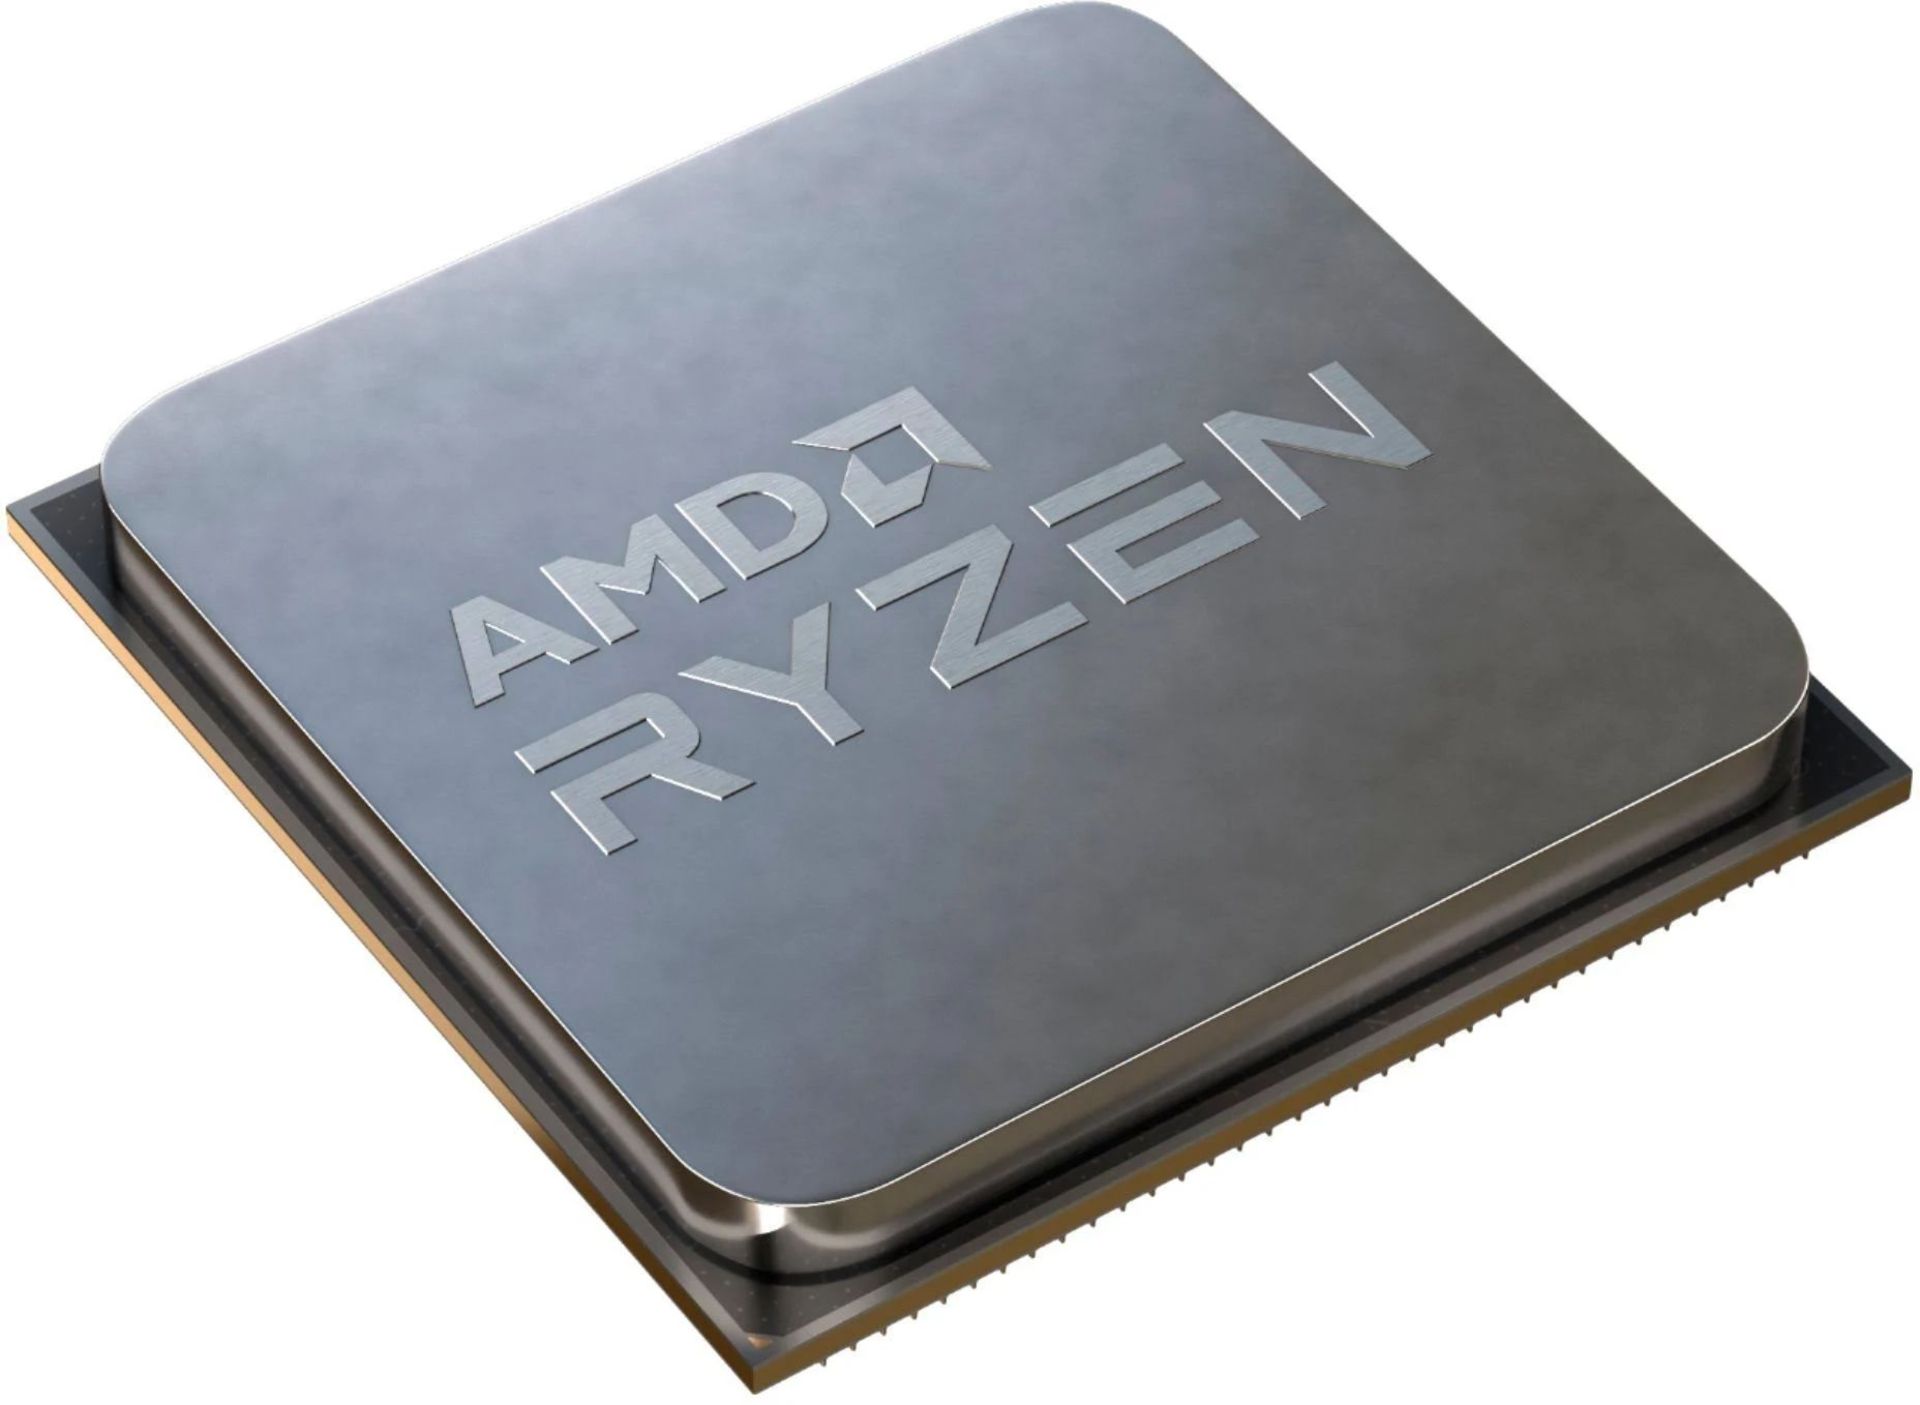 AMD Ryzen 9 5950X - 16 cores - 3.4GHz (Boosts to 4.9GHz). - P6. RRP £399.00. The AMD Ryzen 9 5900X